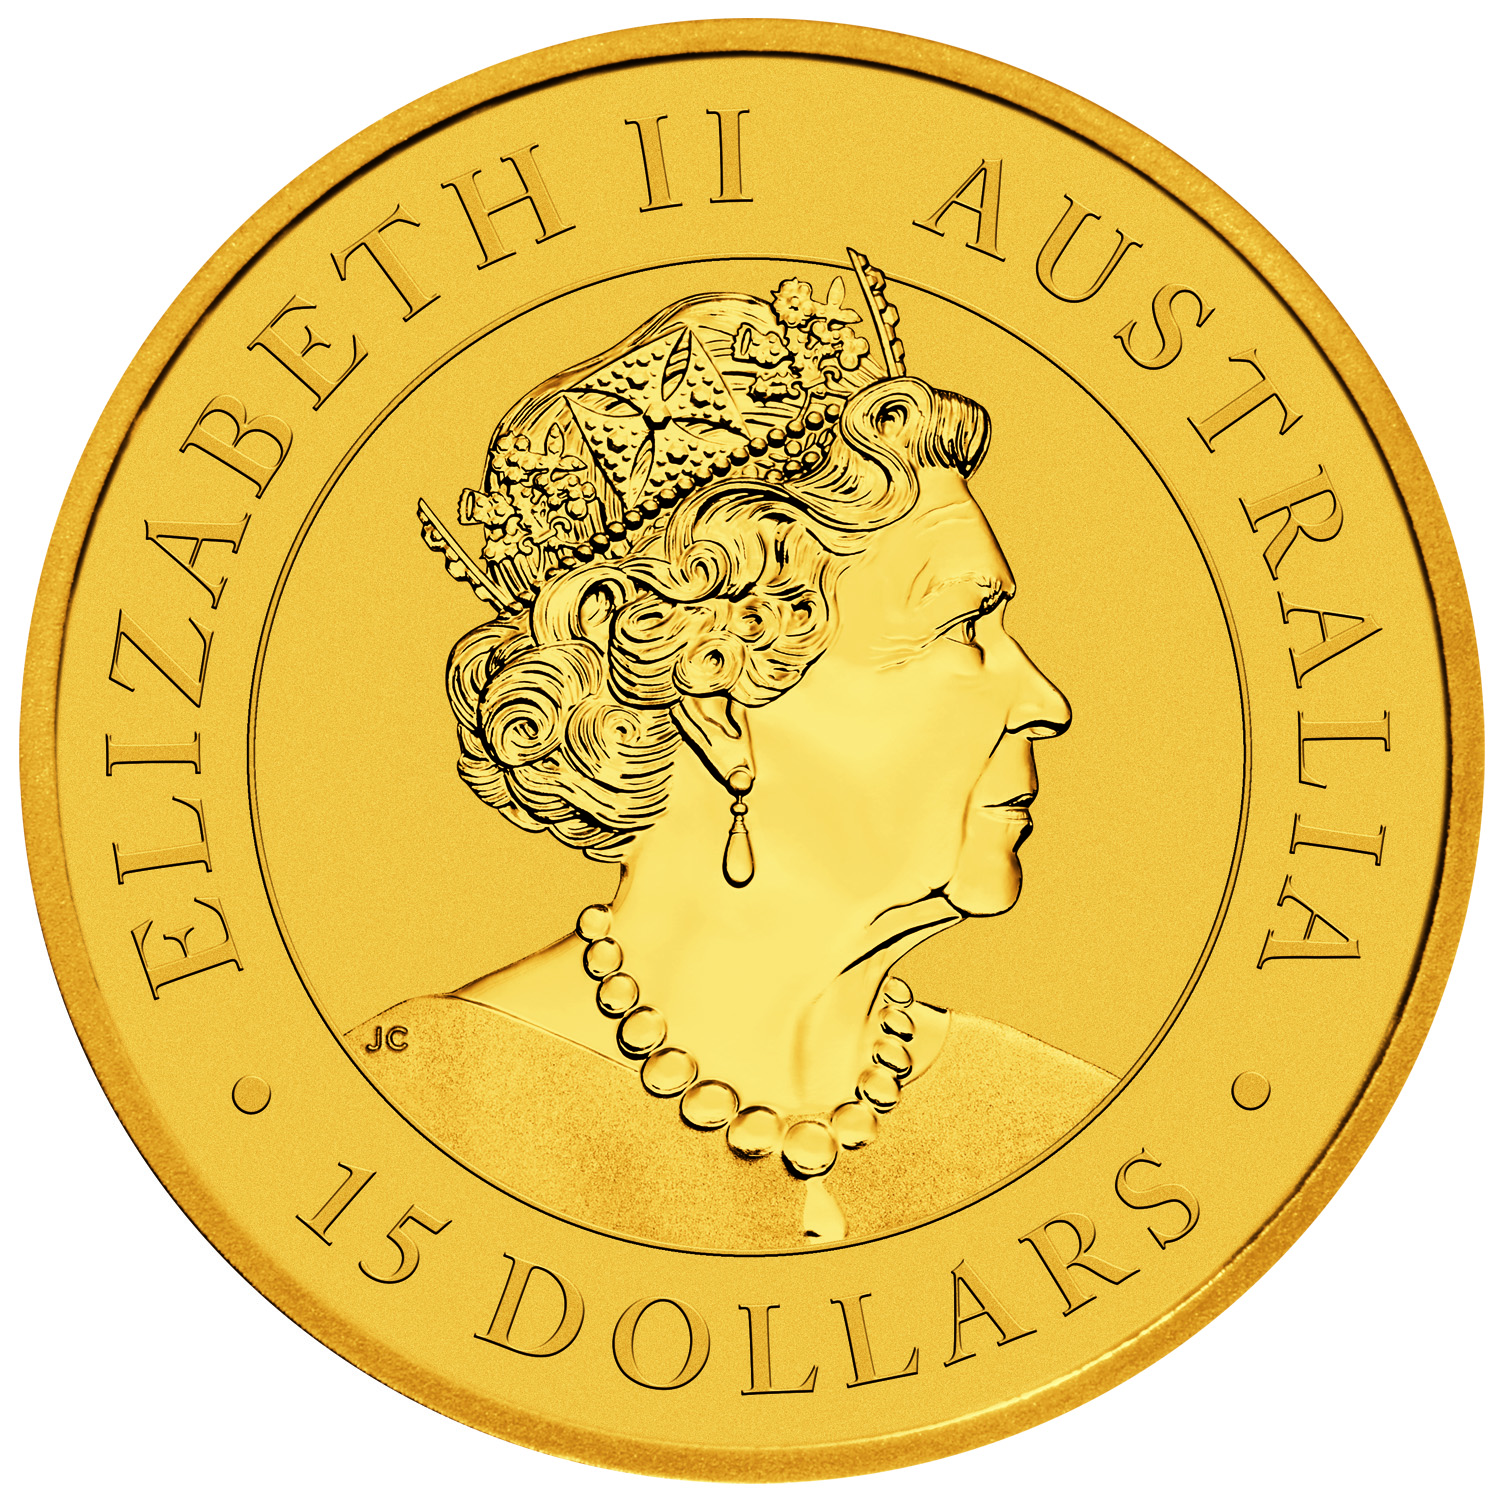 1/10 oz Australian Gold Kangaroo 2021 Die limitierte Goldmünze hier